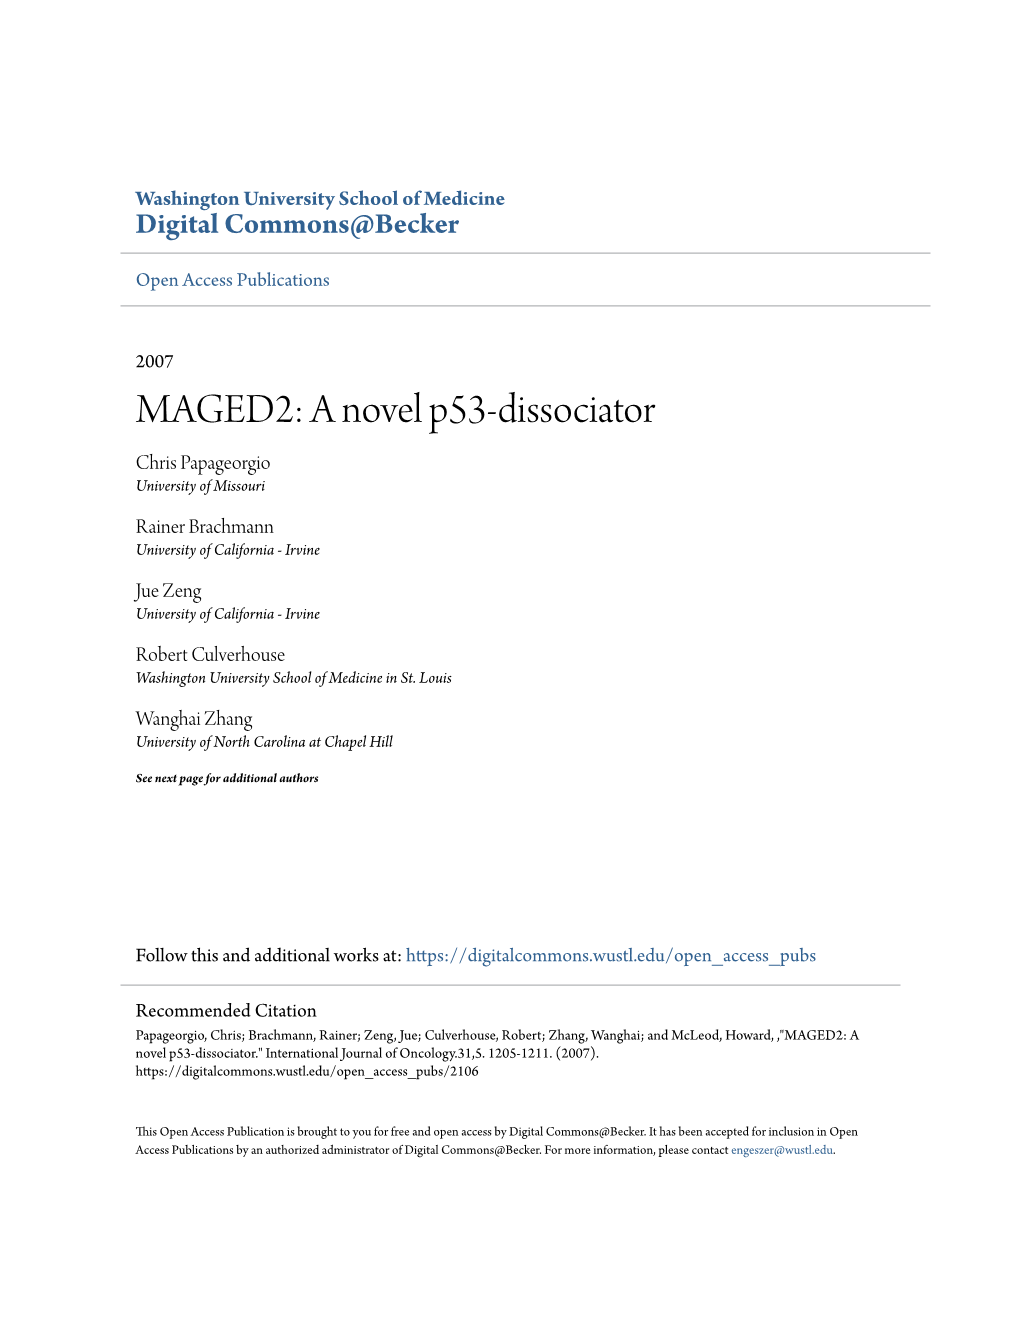 MAGED2: a Novel P53-Dissociator Chris Papageorgio University of Missouri